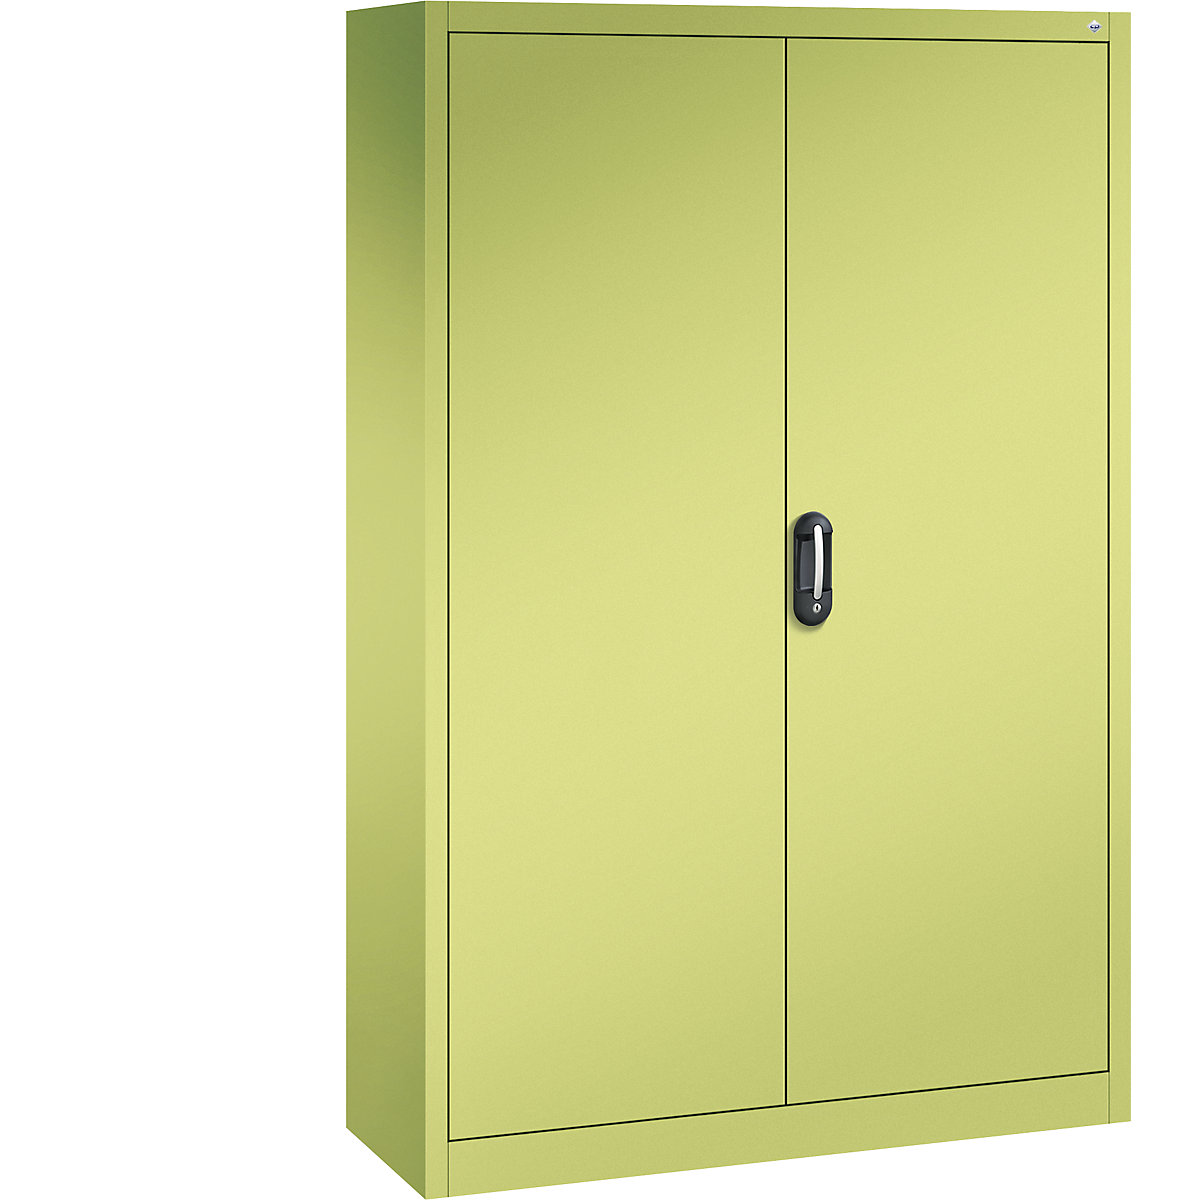 ACURADO universal cupboard – C+P, WxD 1200 x 400 mm, viridian green / viridian green-31